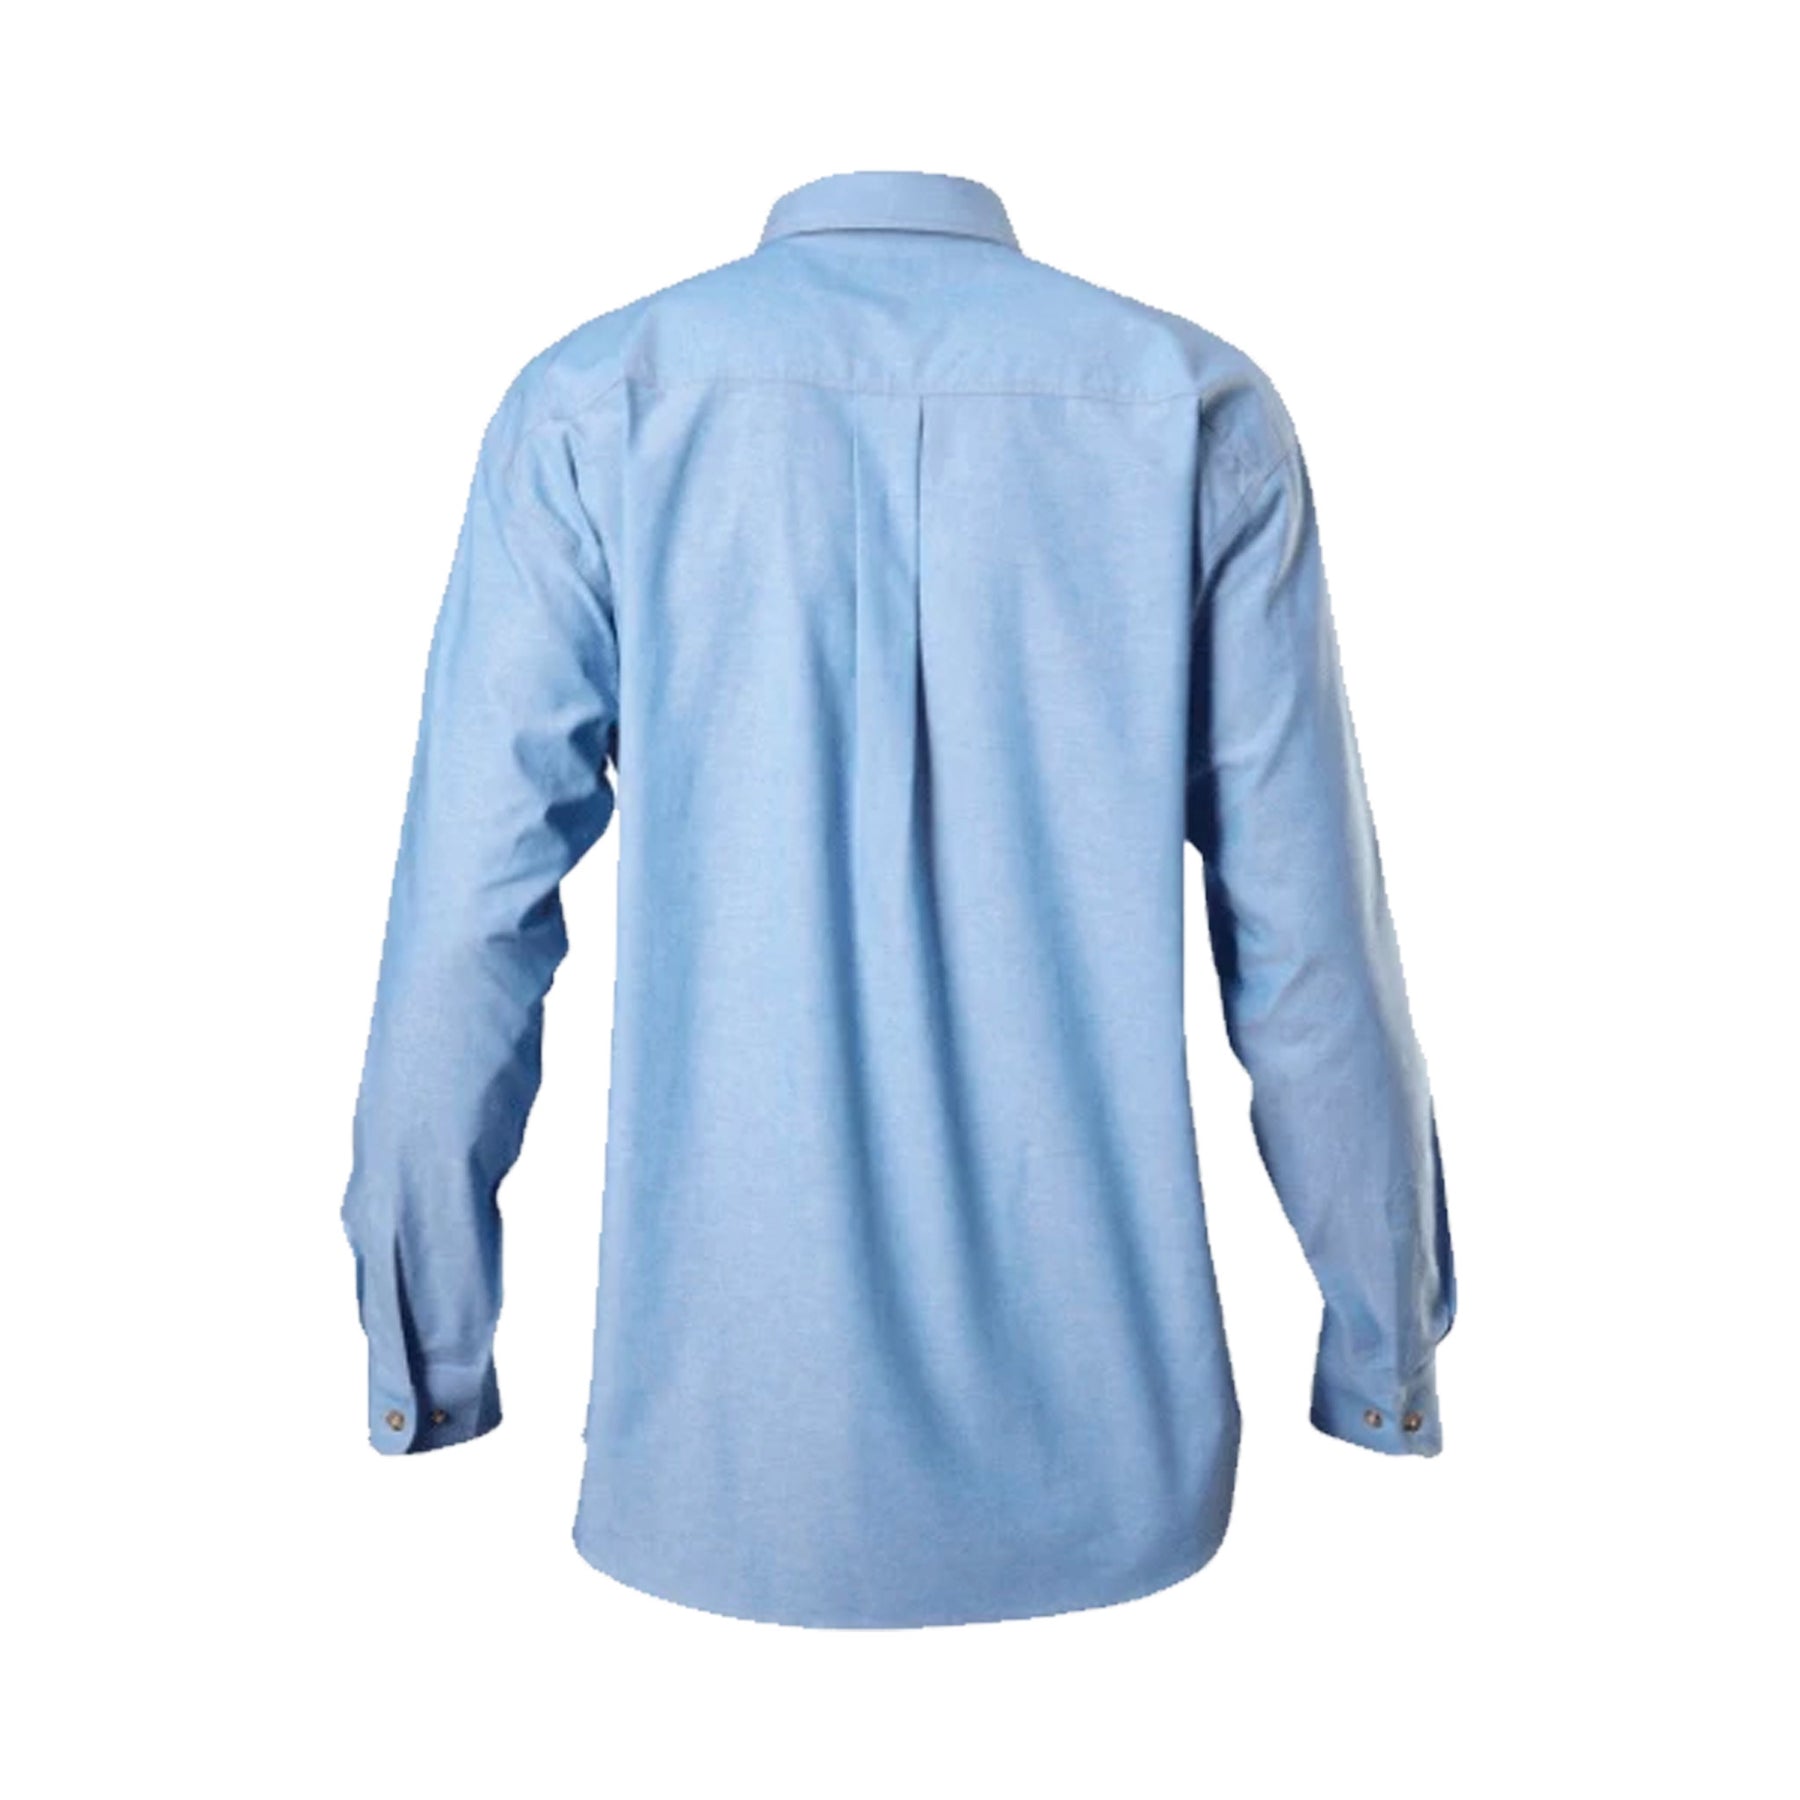 chambray long sleeve cotton shirt back view